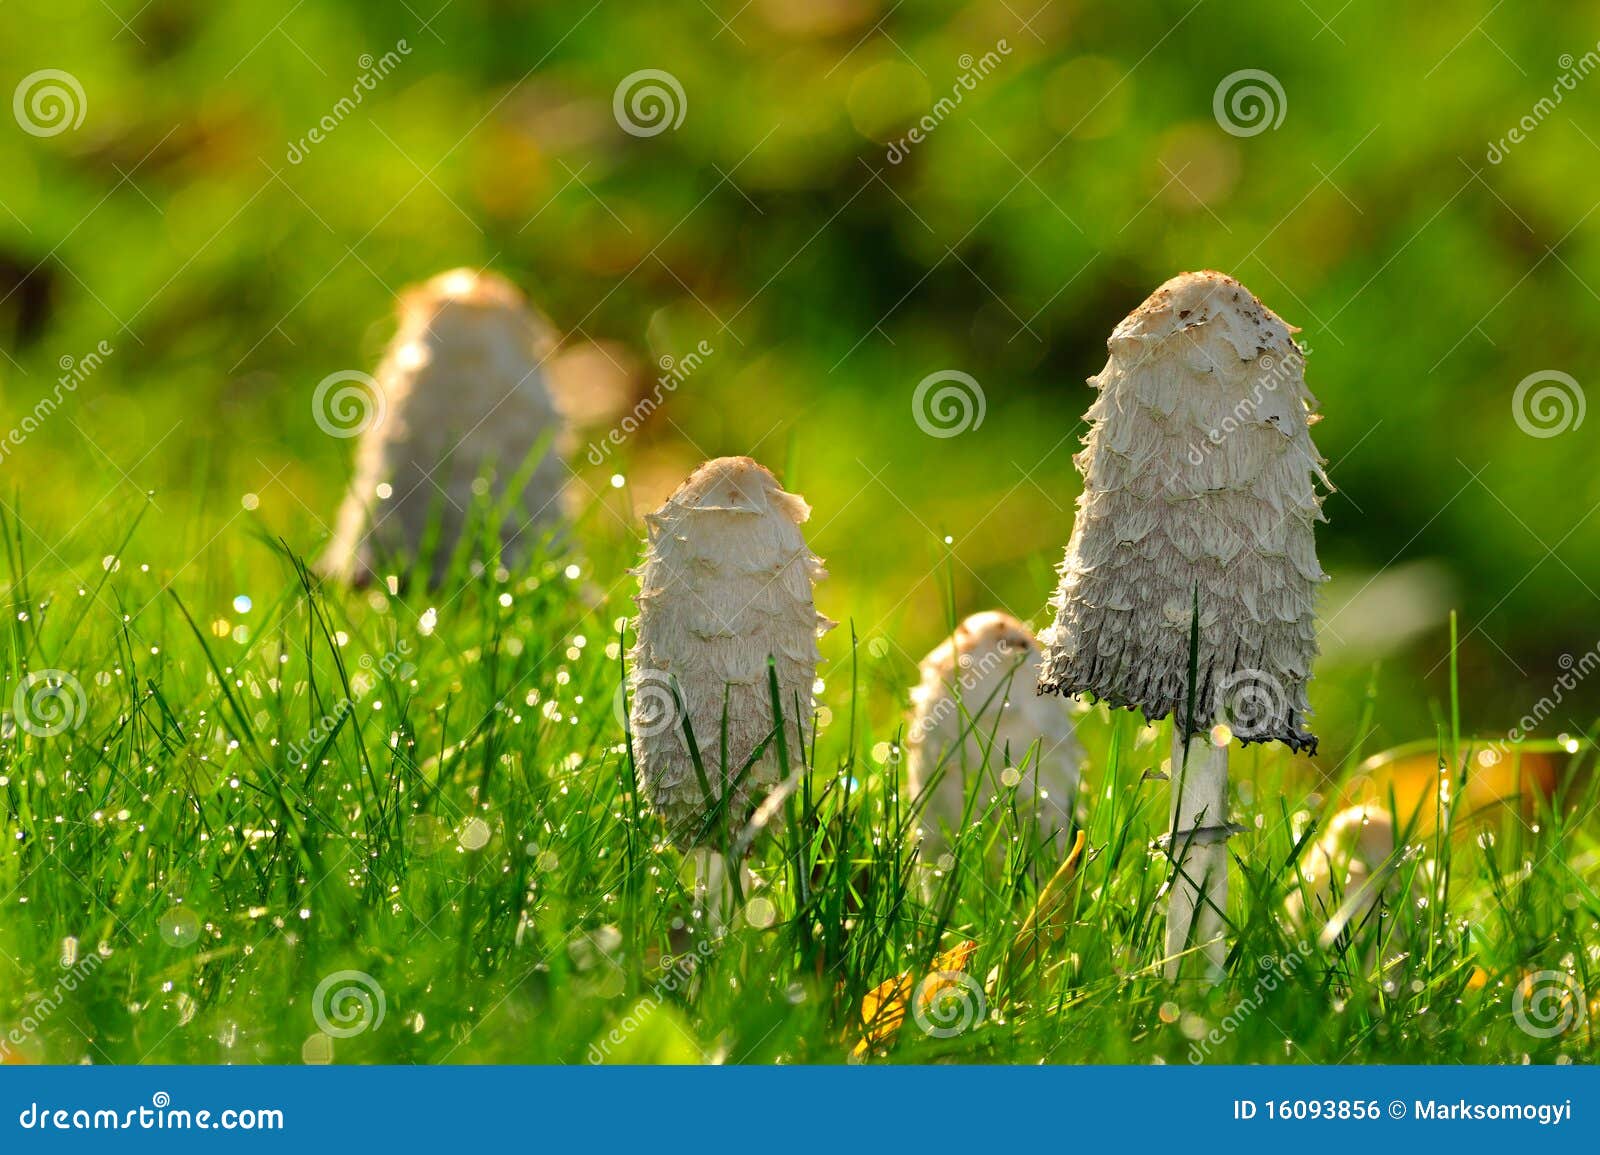 mushroom among the grass